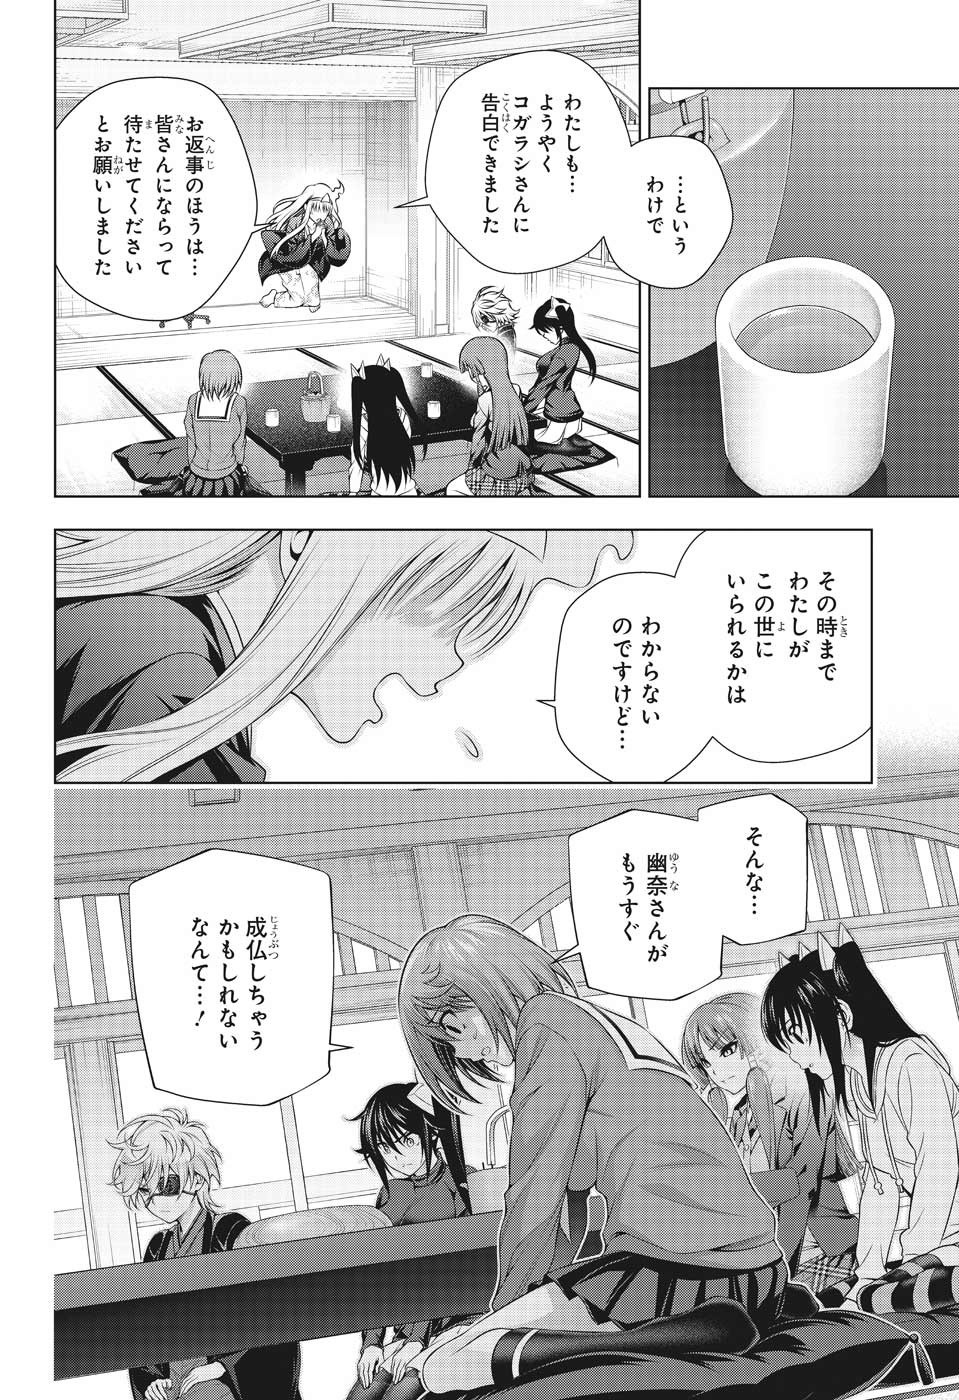 Yuragi-sou no Yuuna-san - ゆらぎ荘の幽奈さん - Chapter 194 - Page 2